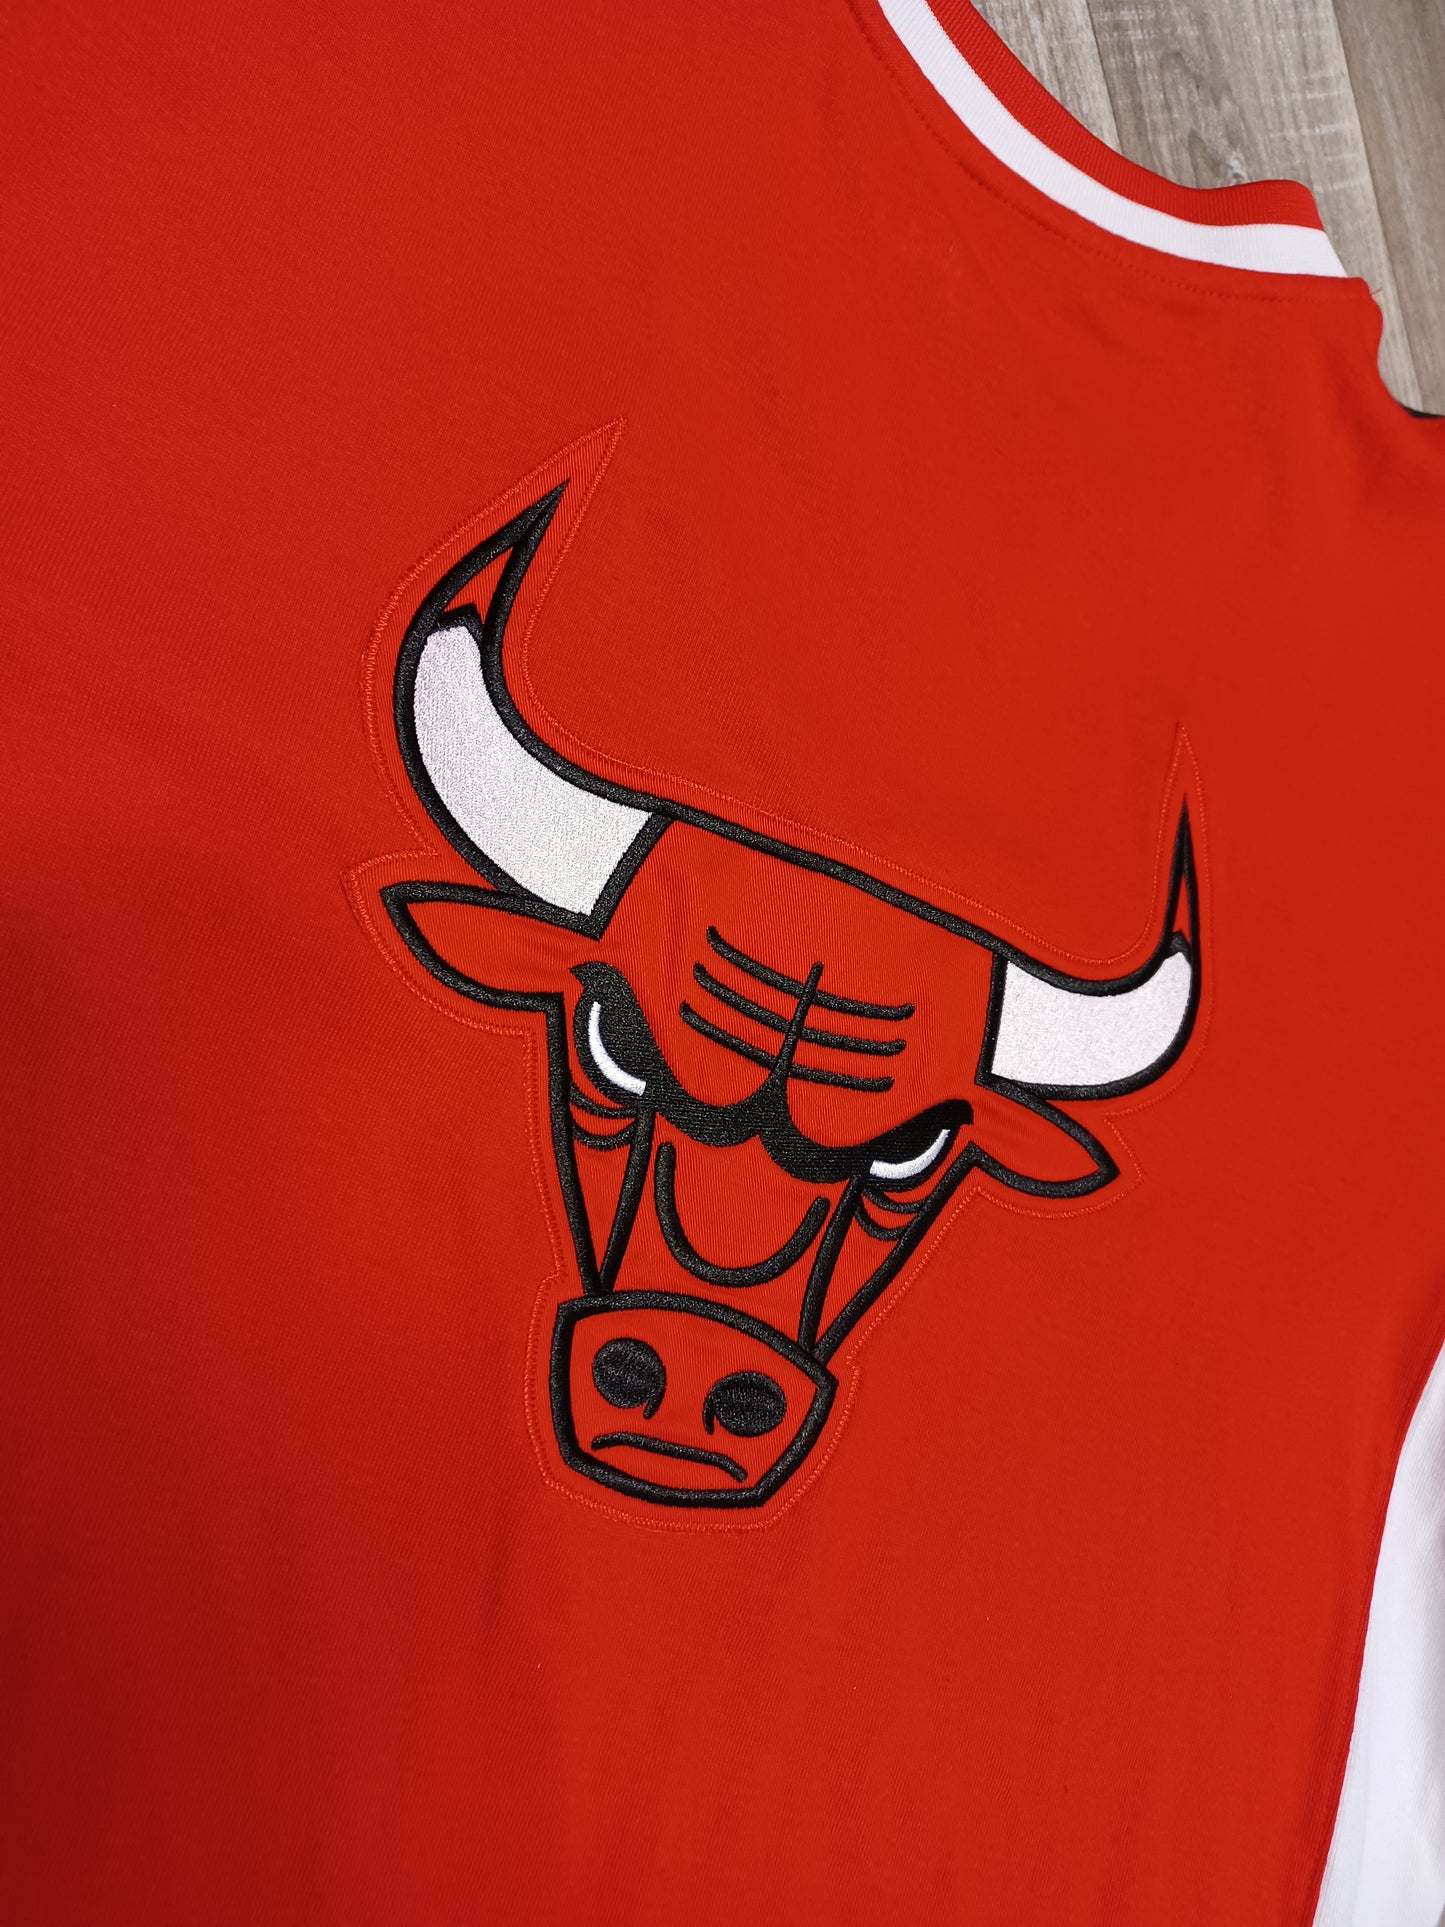 Chicago Bulls Authentic Warm Up T-Shirt Size Large